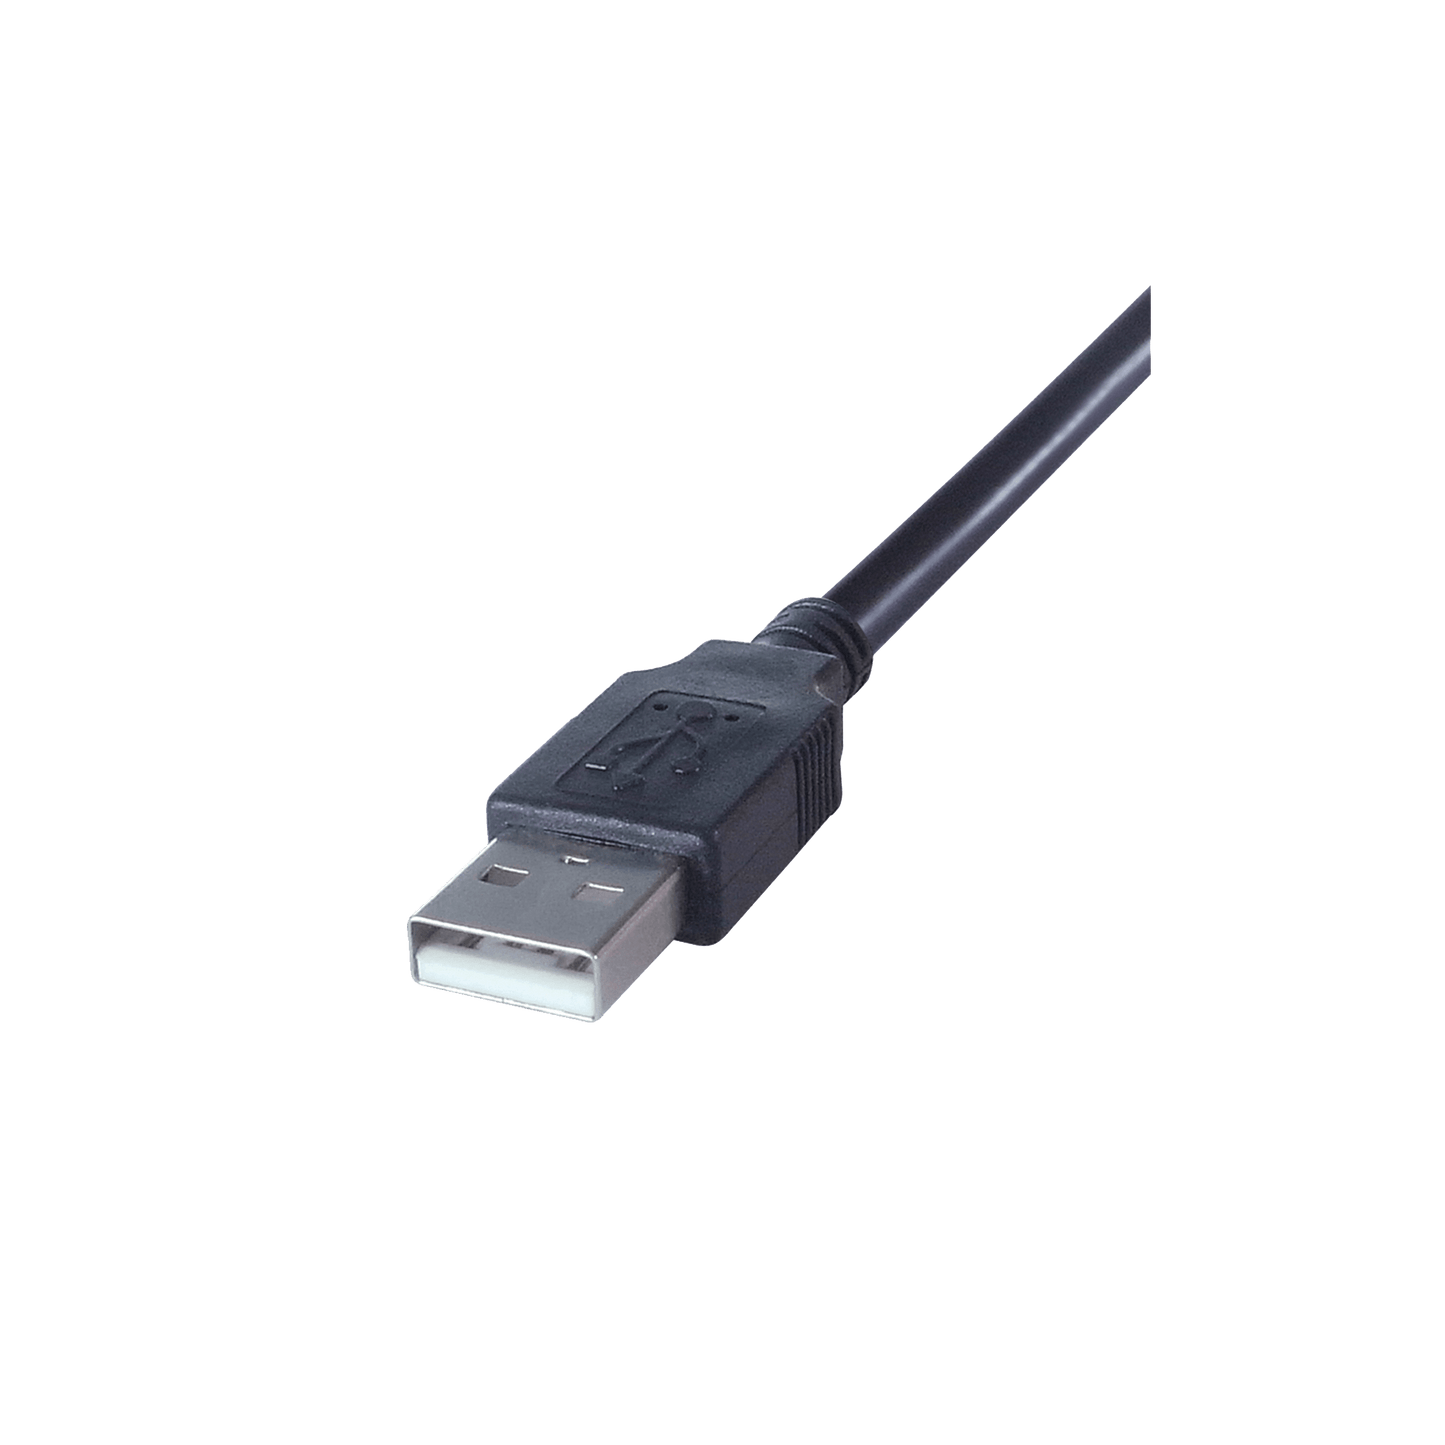 USB keyboard connection 